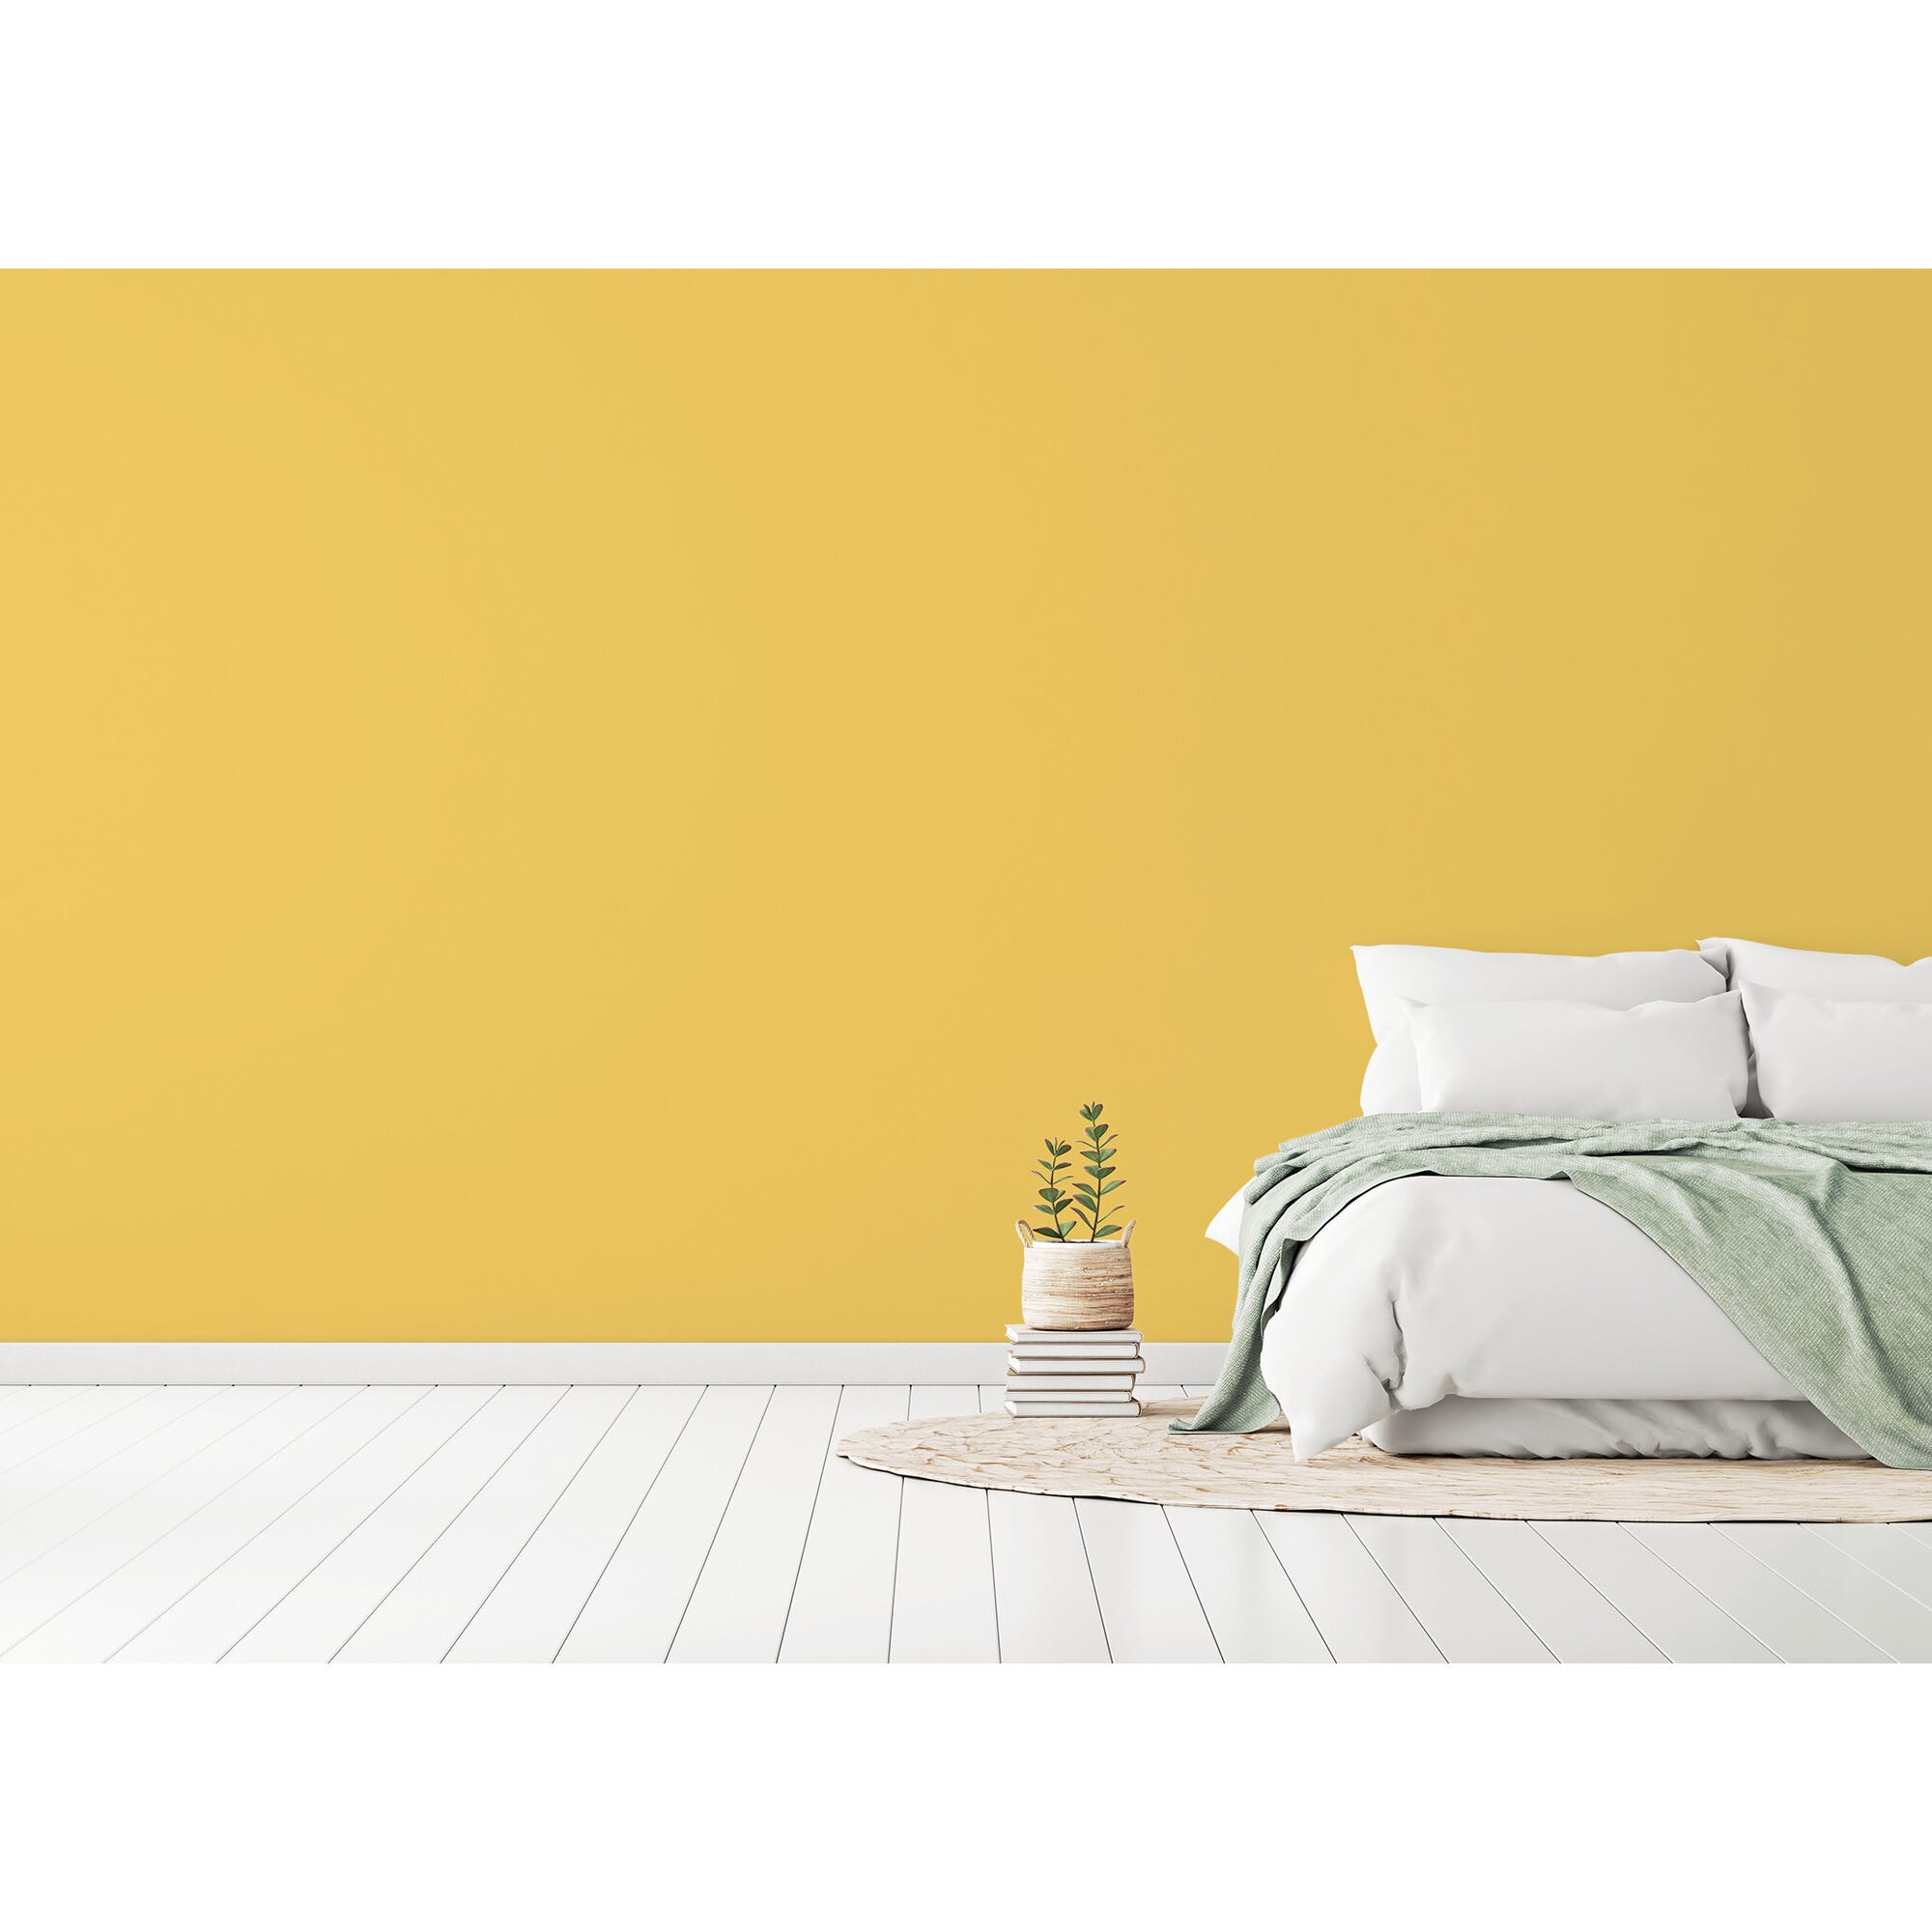 Peinture intérieure mat jaune mehoffer teintée en machine 4L HPO - MOSAIK 4